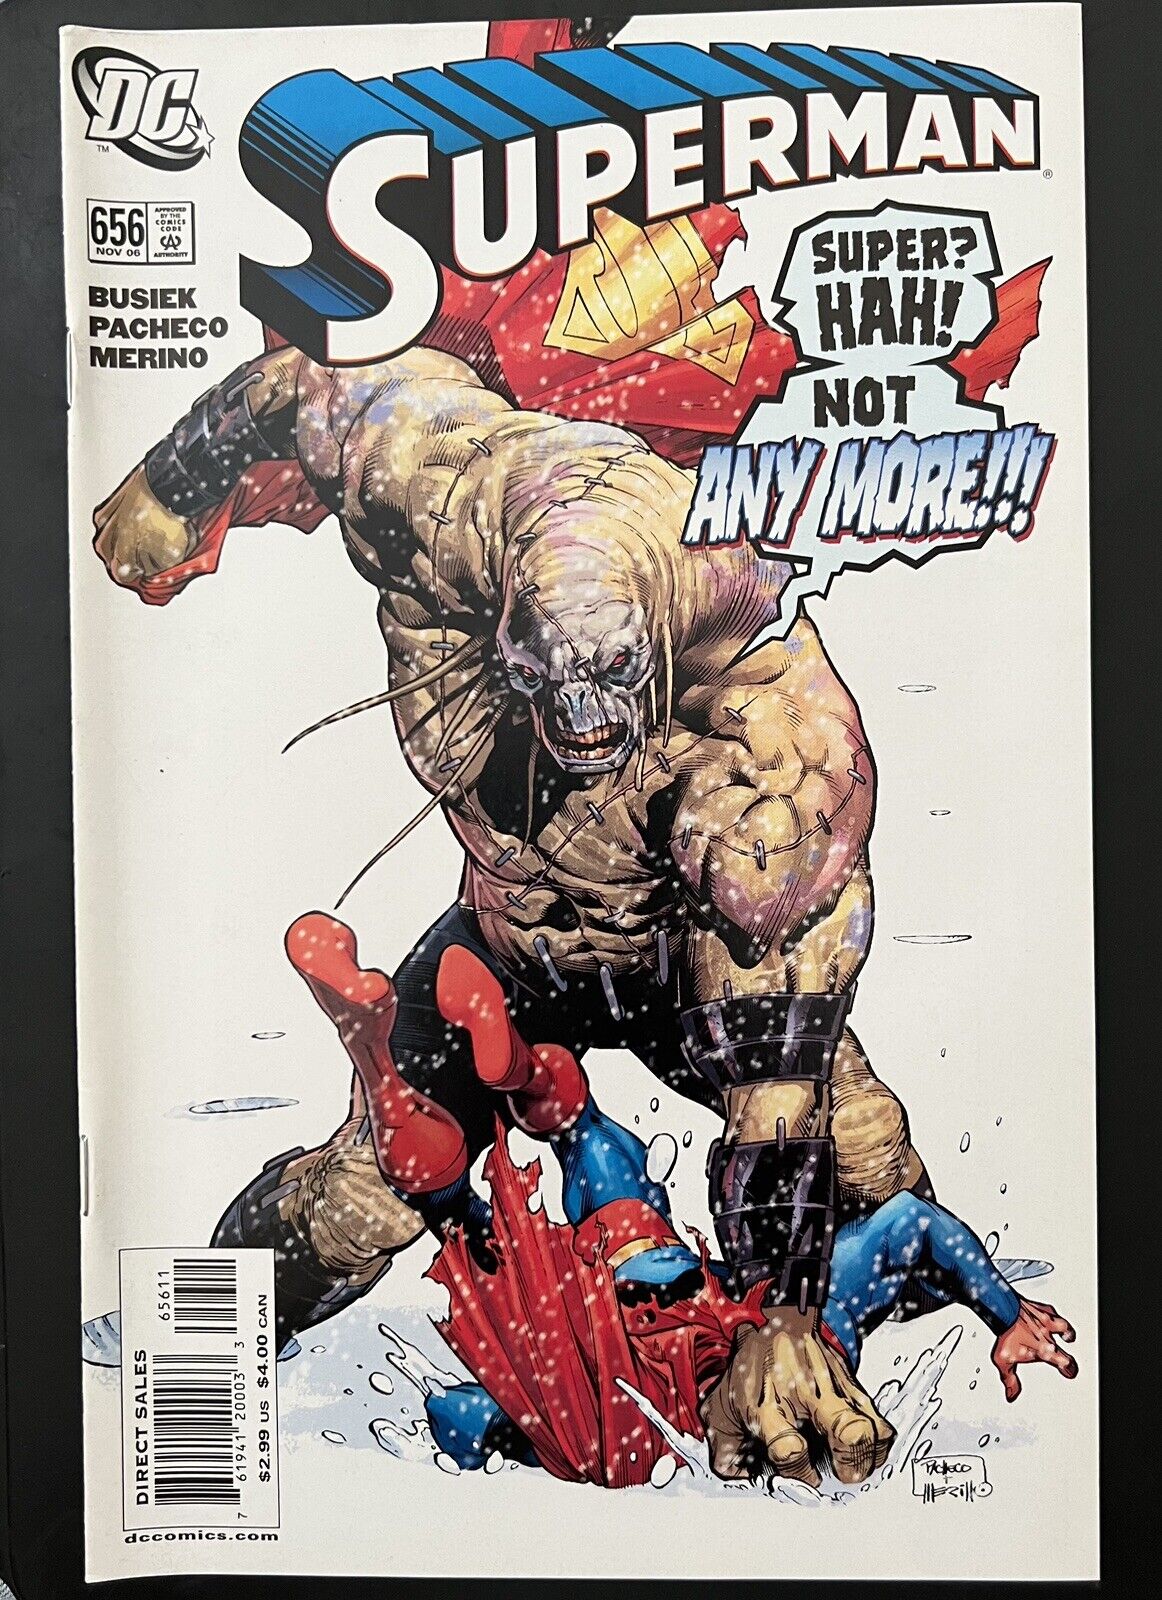 DC COMIC BOOK SUPERMAN #656 NOV 2006